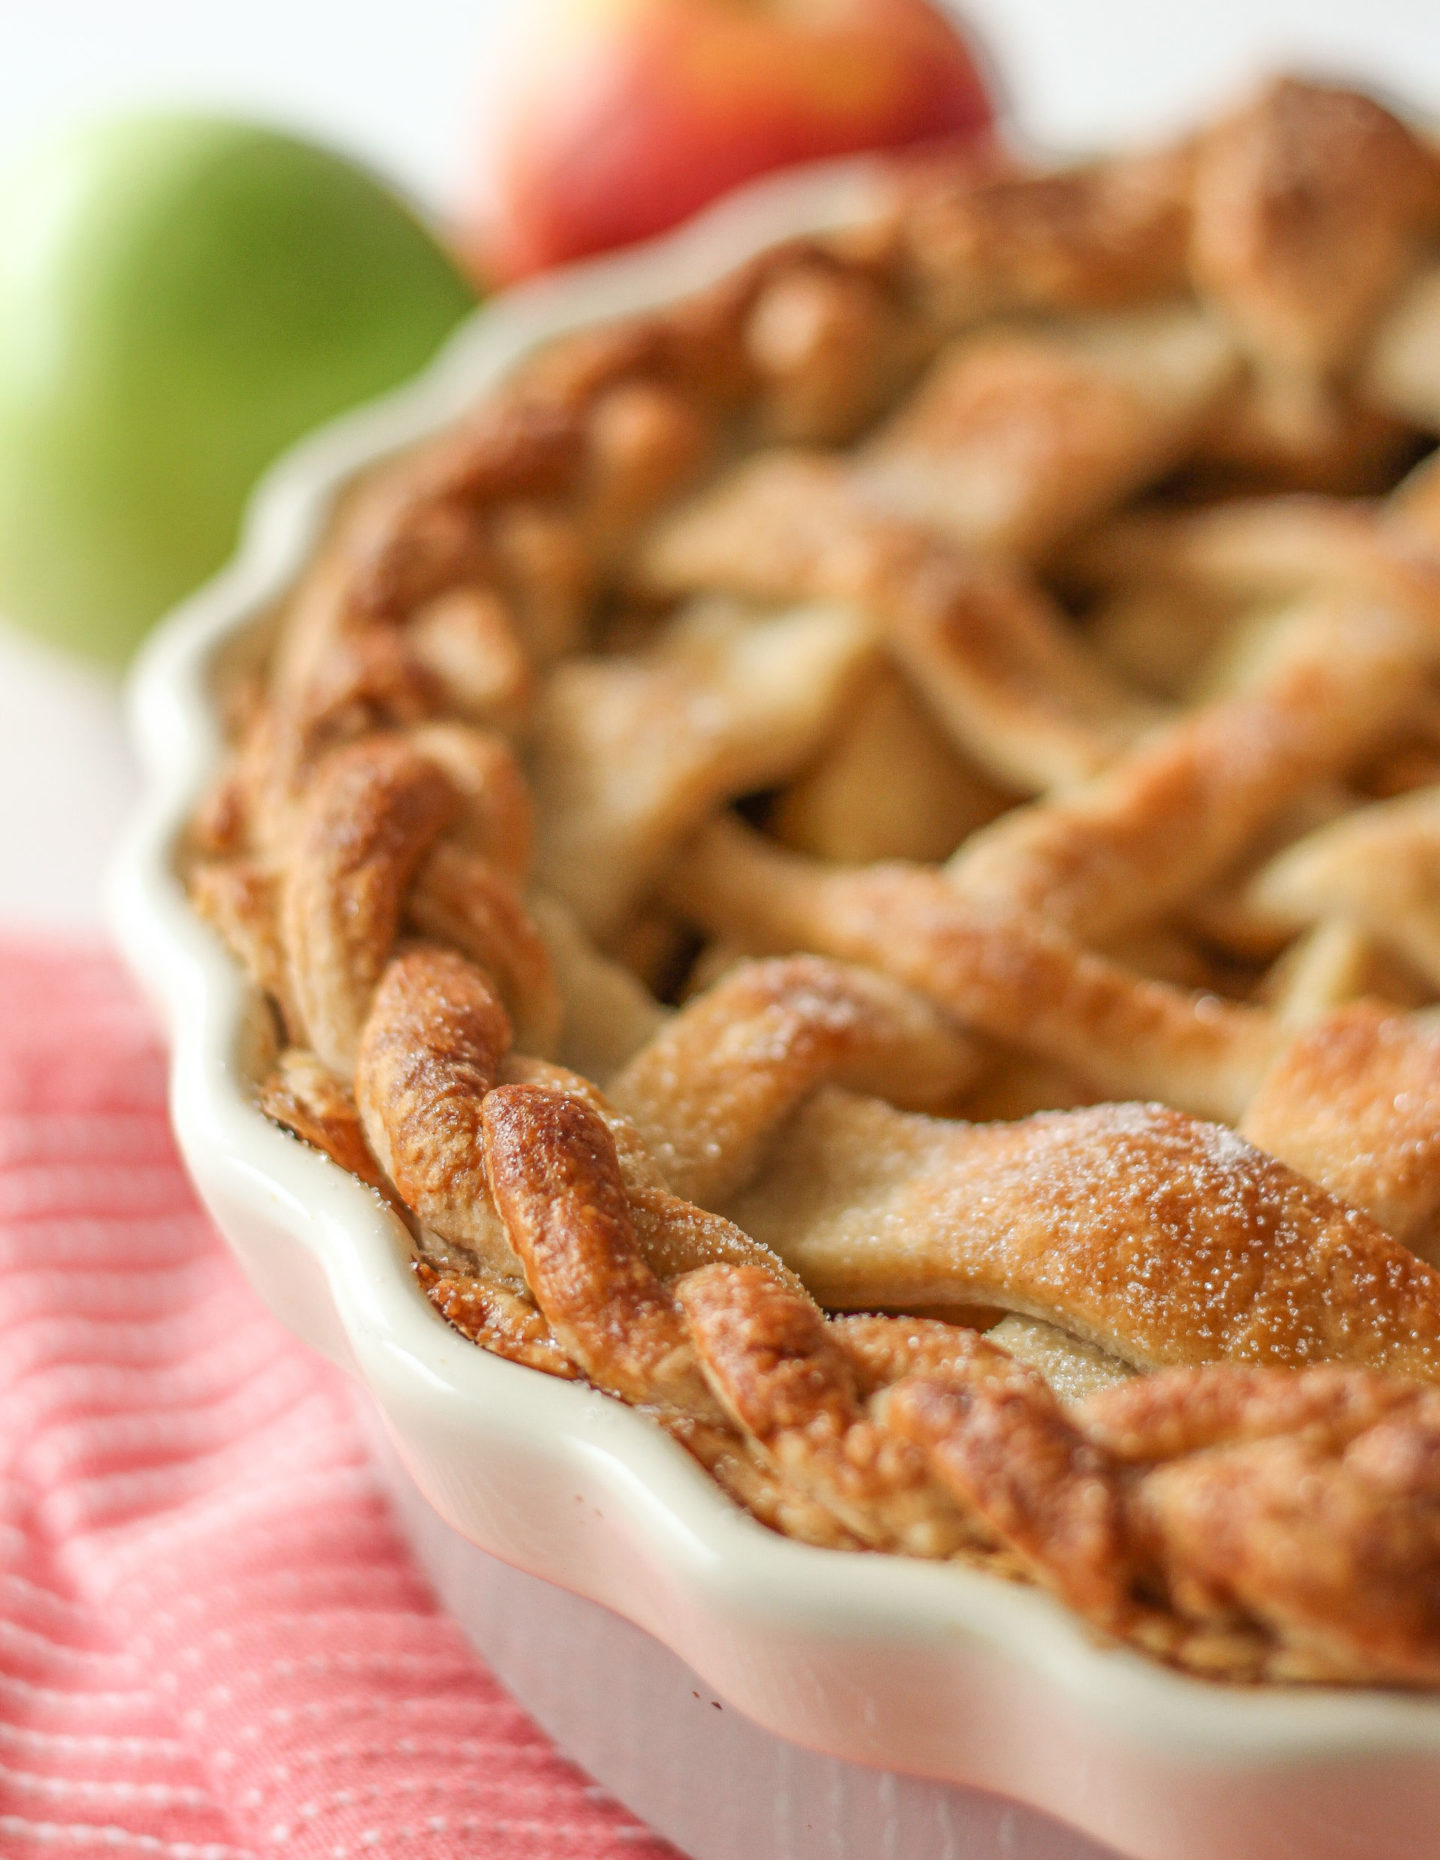 close up of unsliced lattice apple pie, focussed on the plaited crust